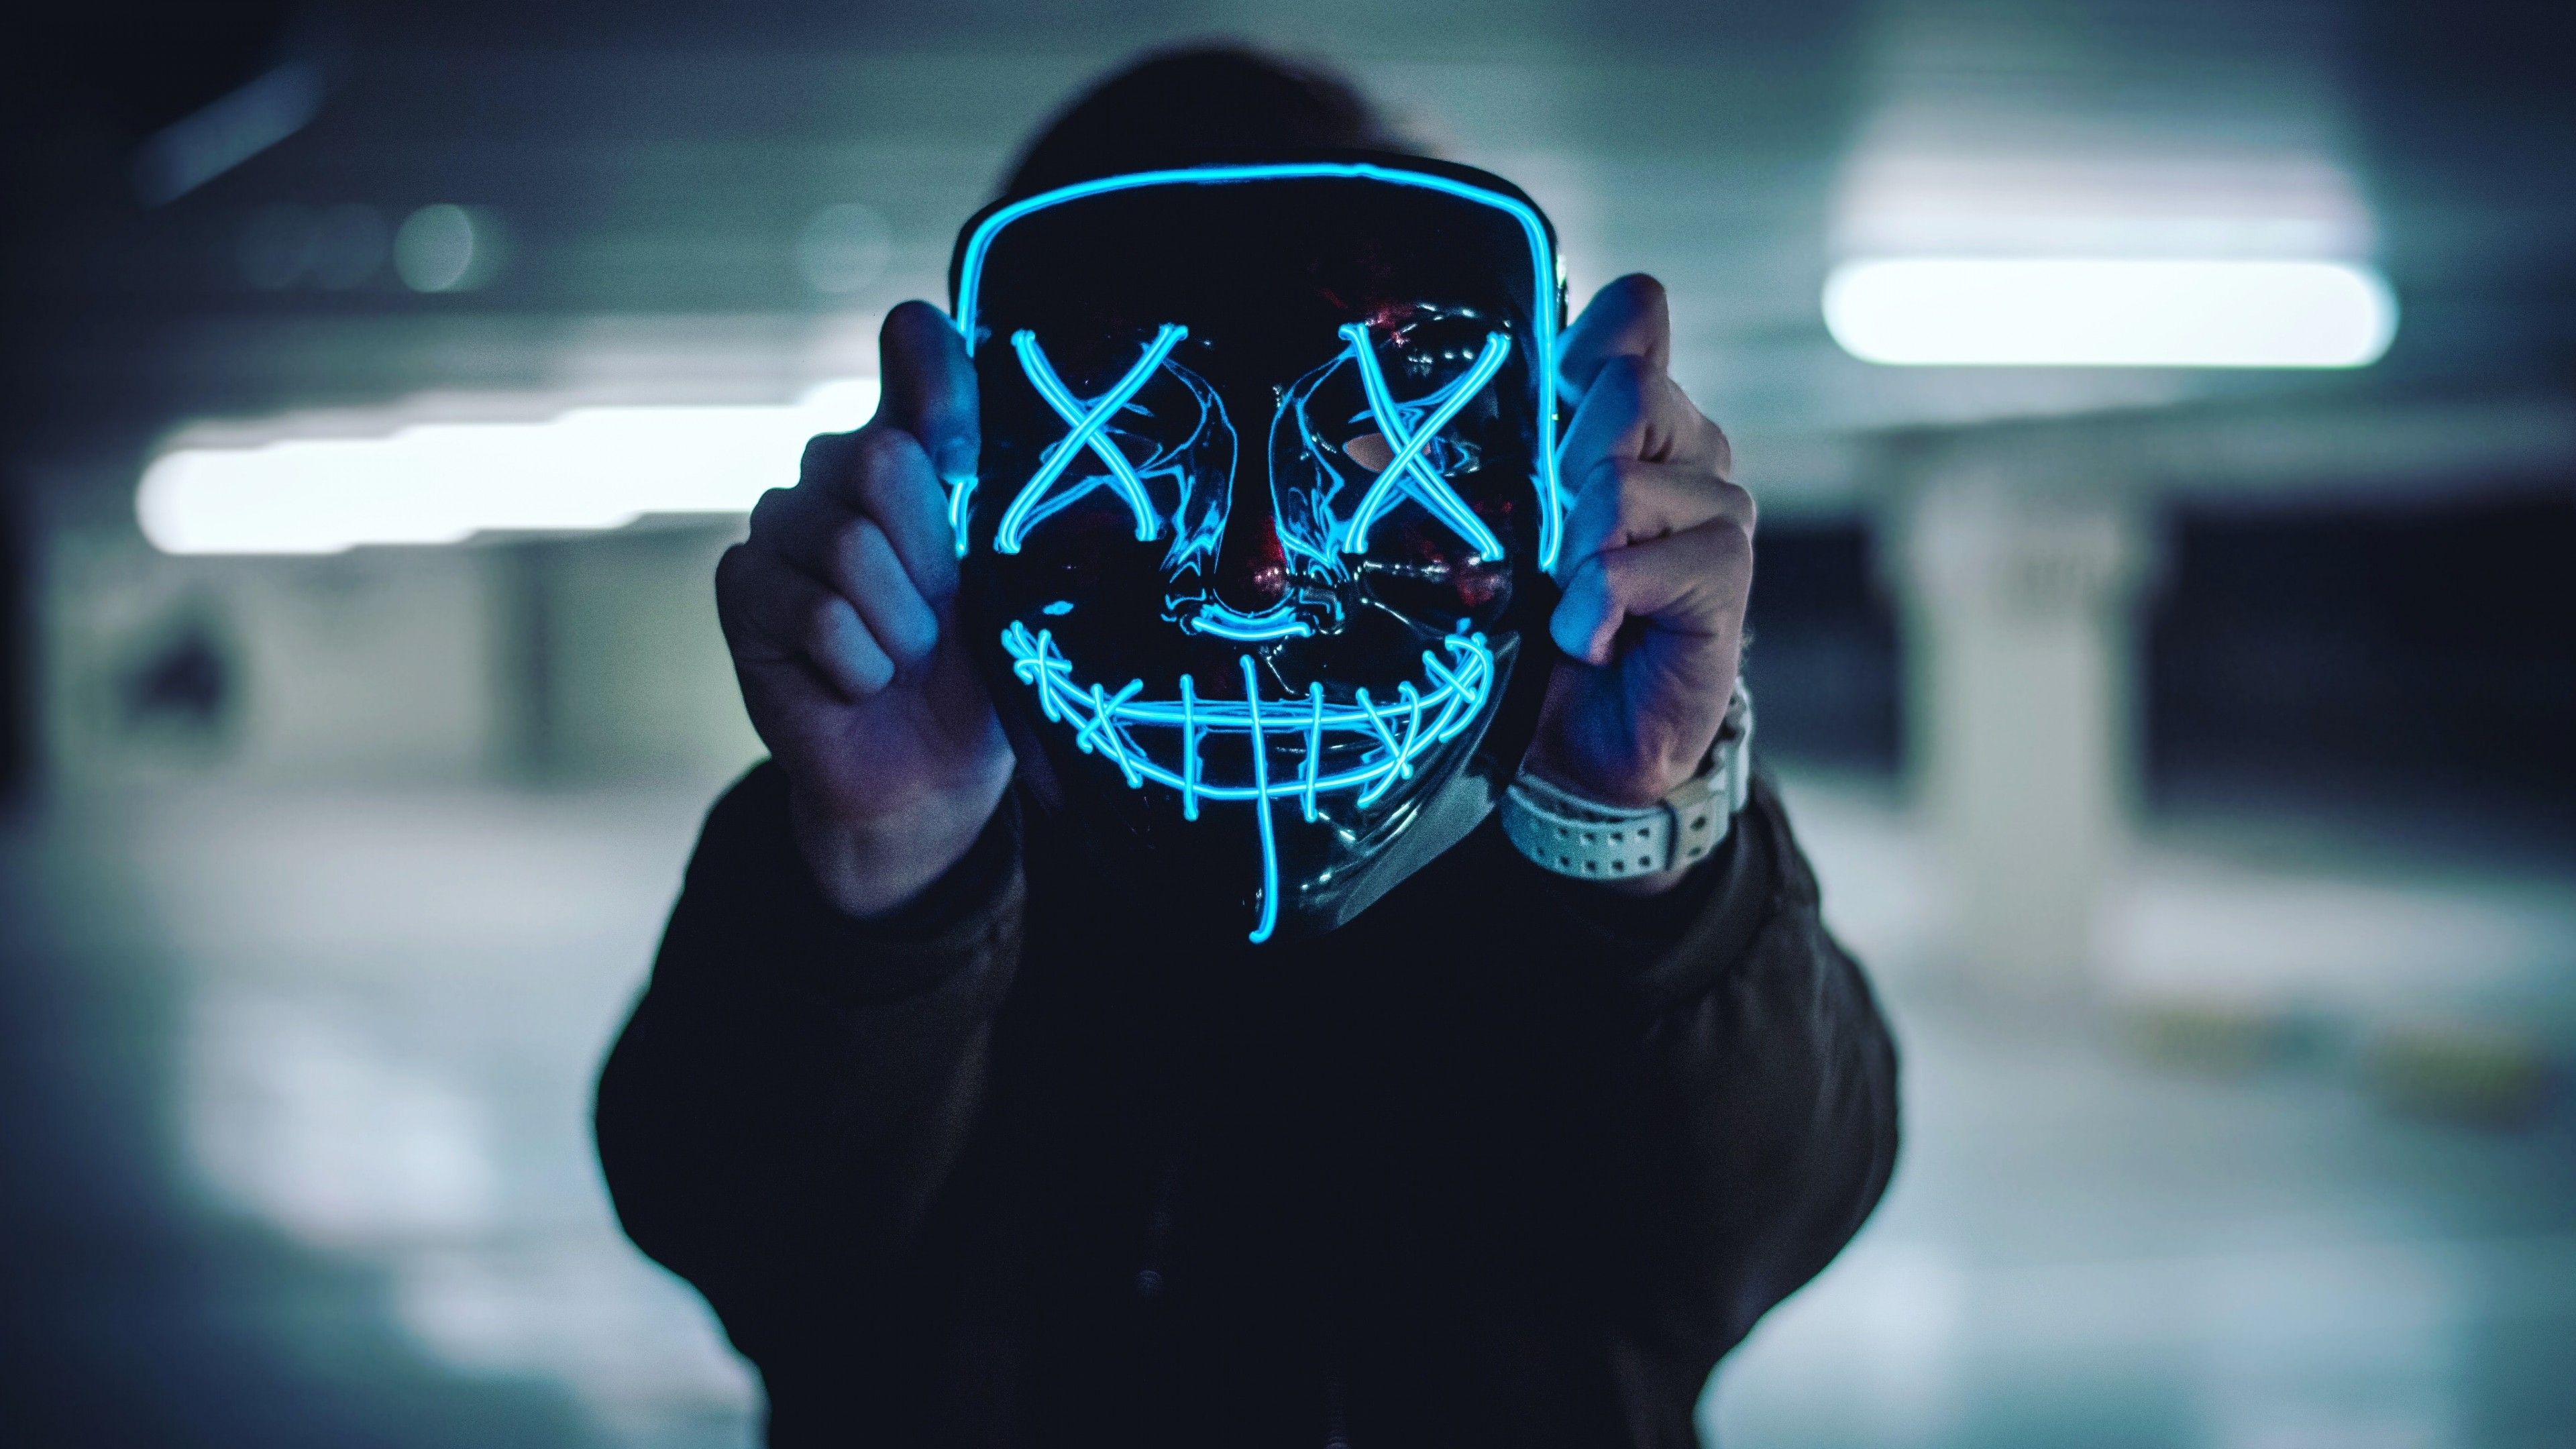 Neon Mask 4K Wallpaper, Blue Lights, Portrait, Anonymous, Face Mask, Photography